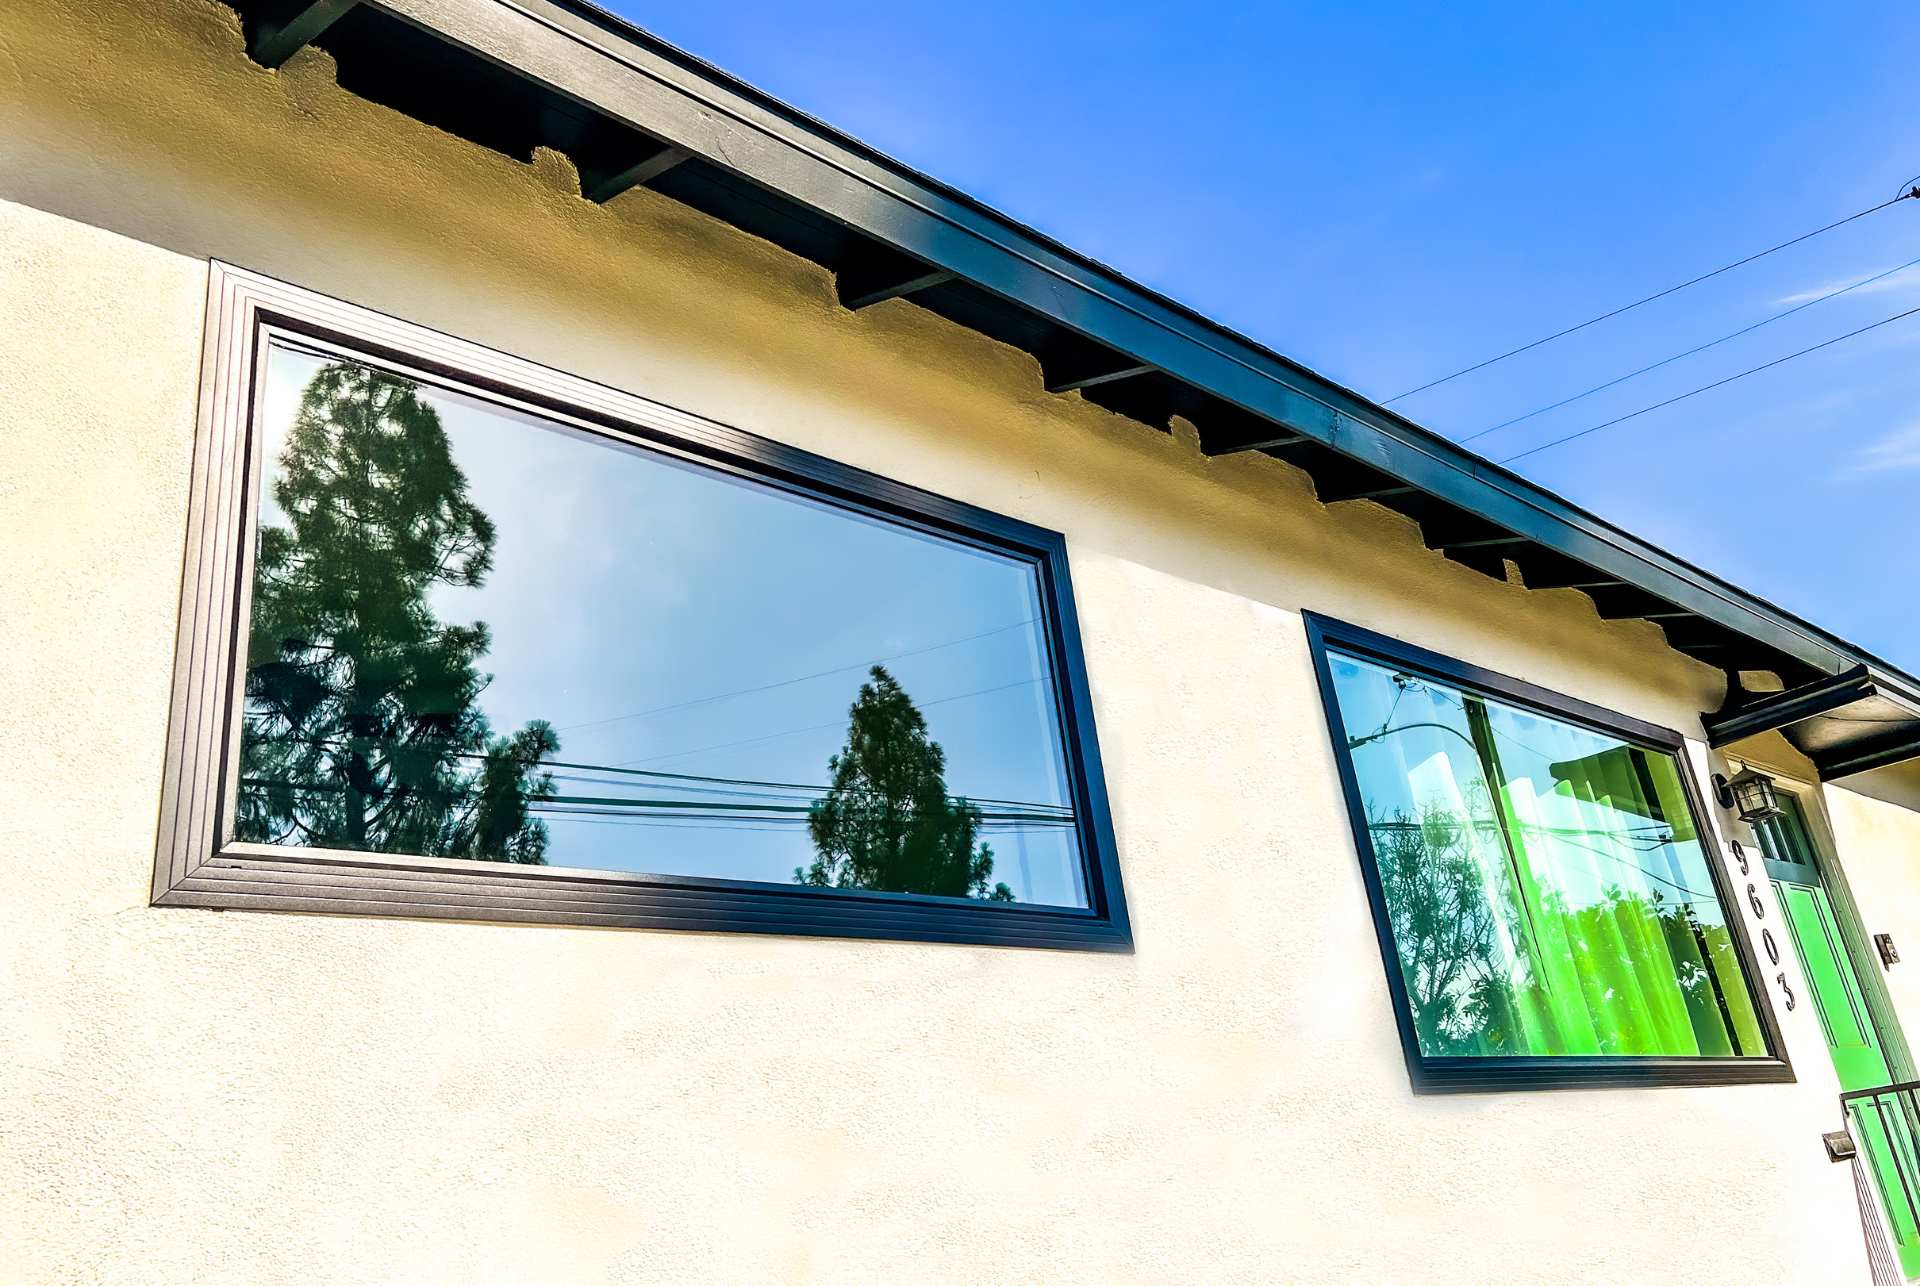 write me a metatag description on Family Home Improvements' latest black vinyl retrofit enery efficient window installation in Montclair, CA